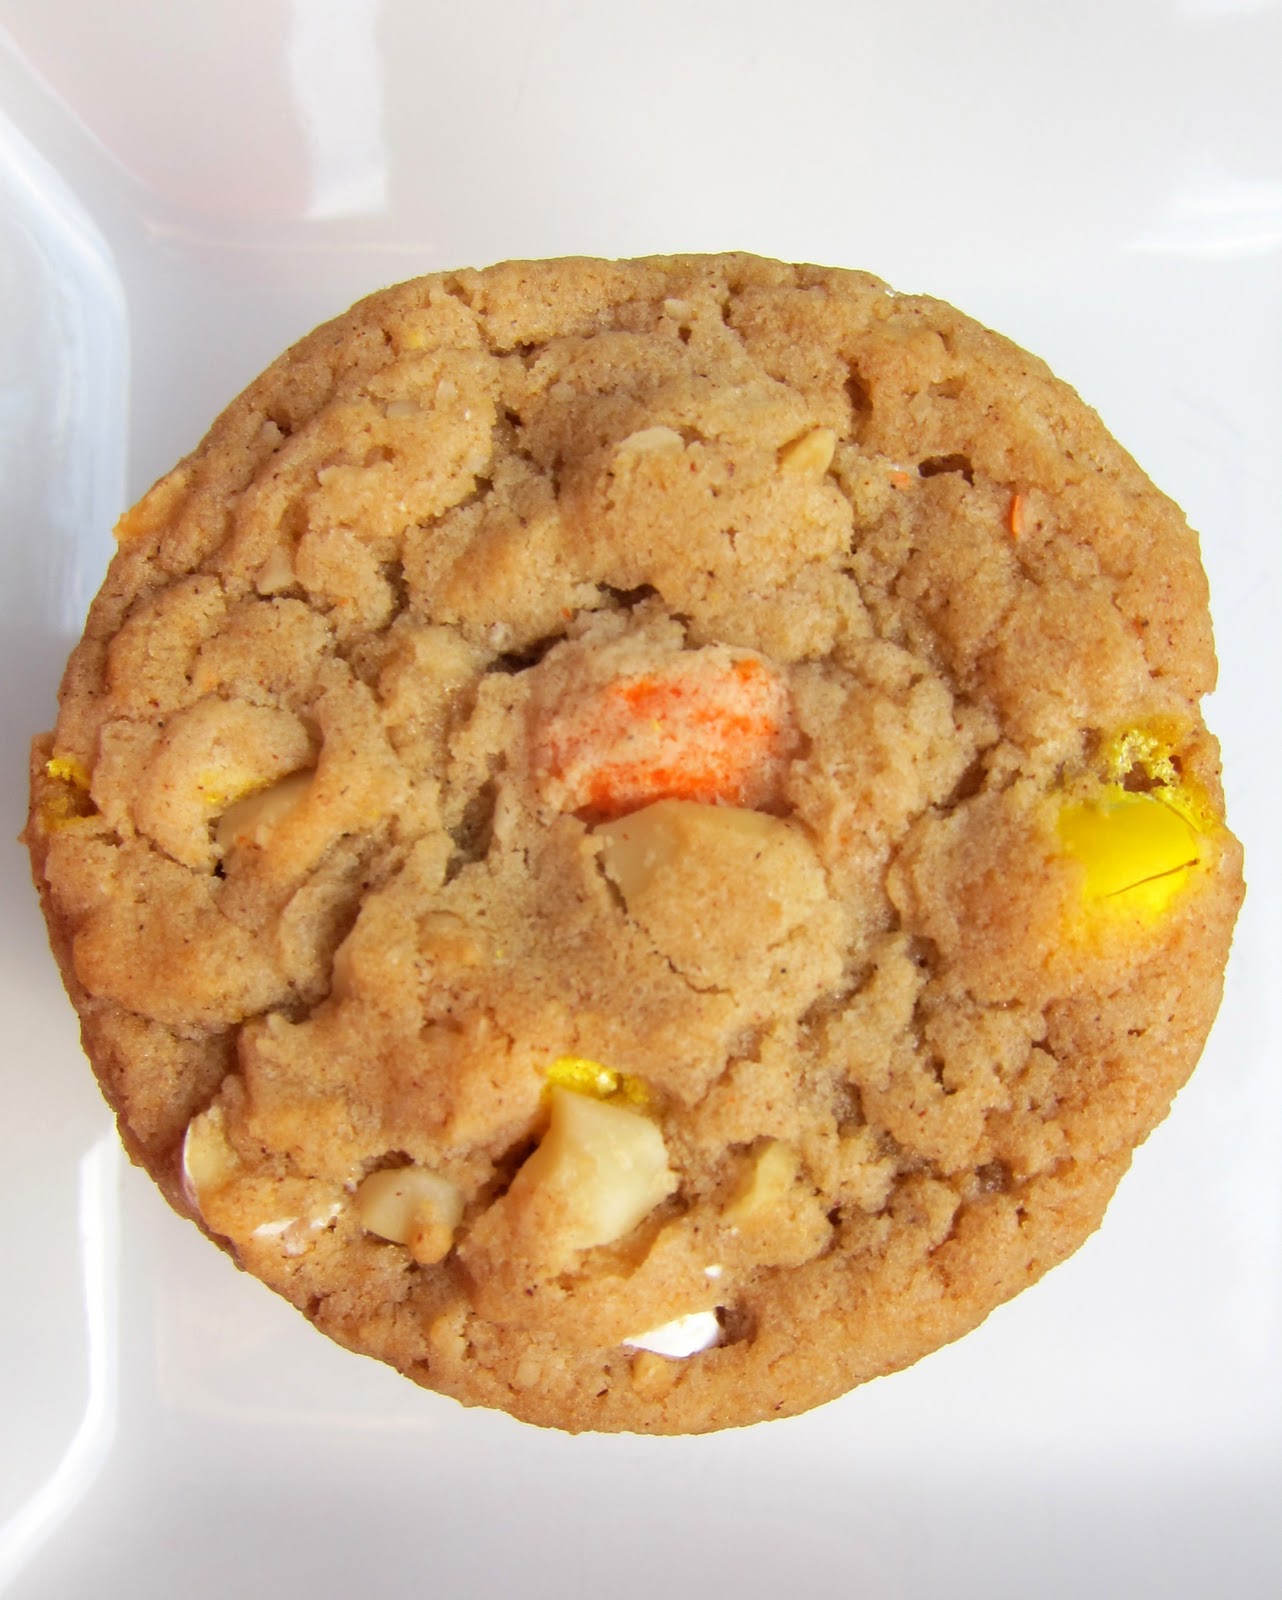 macadamia nut cookies